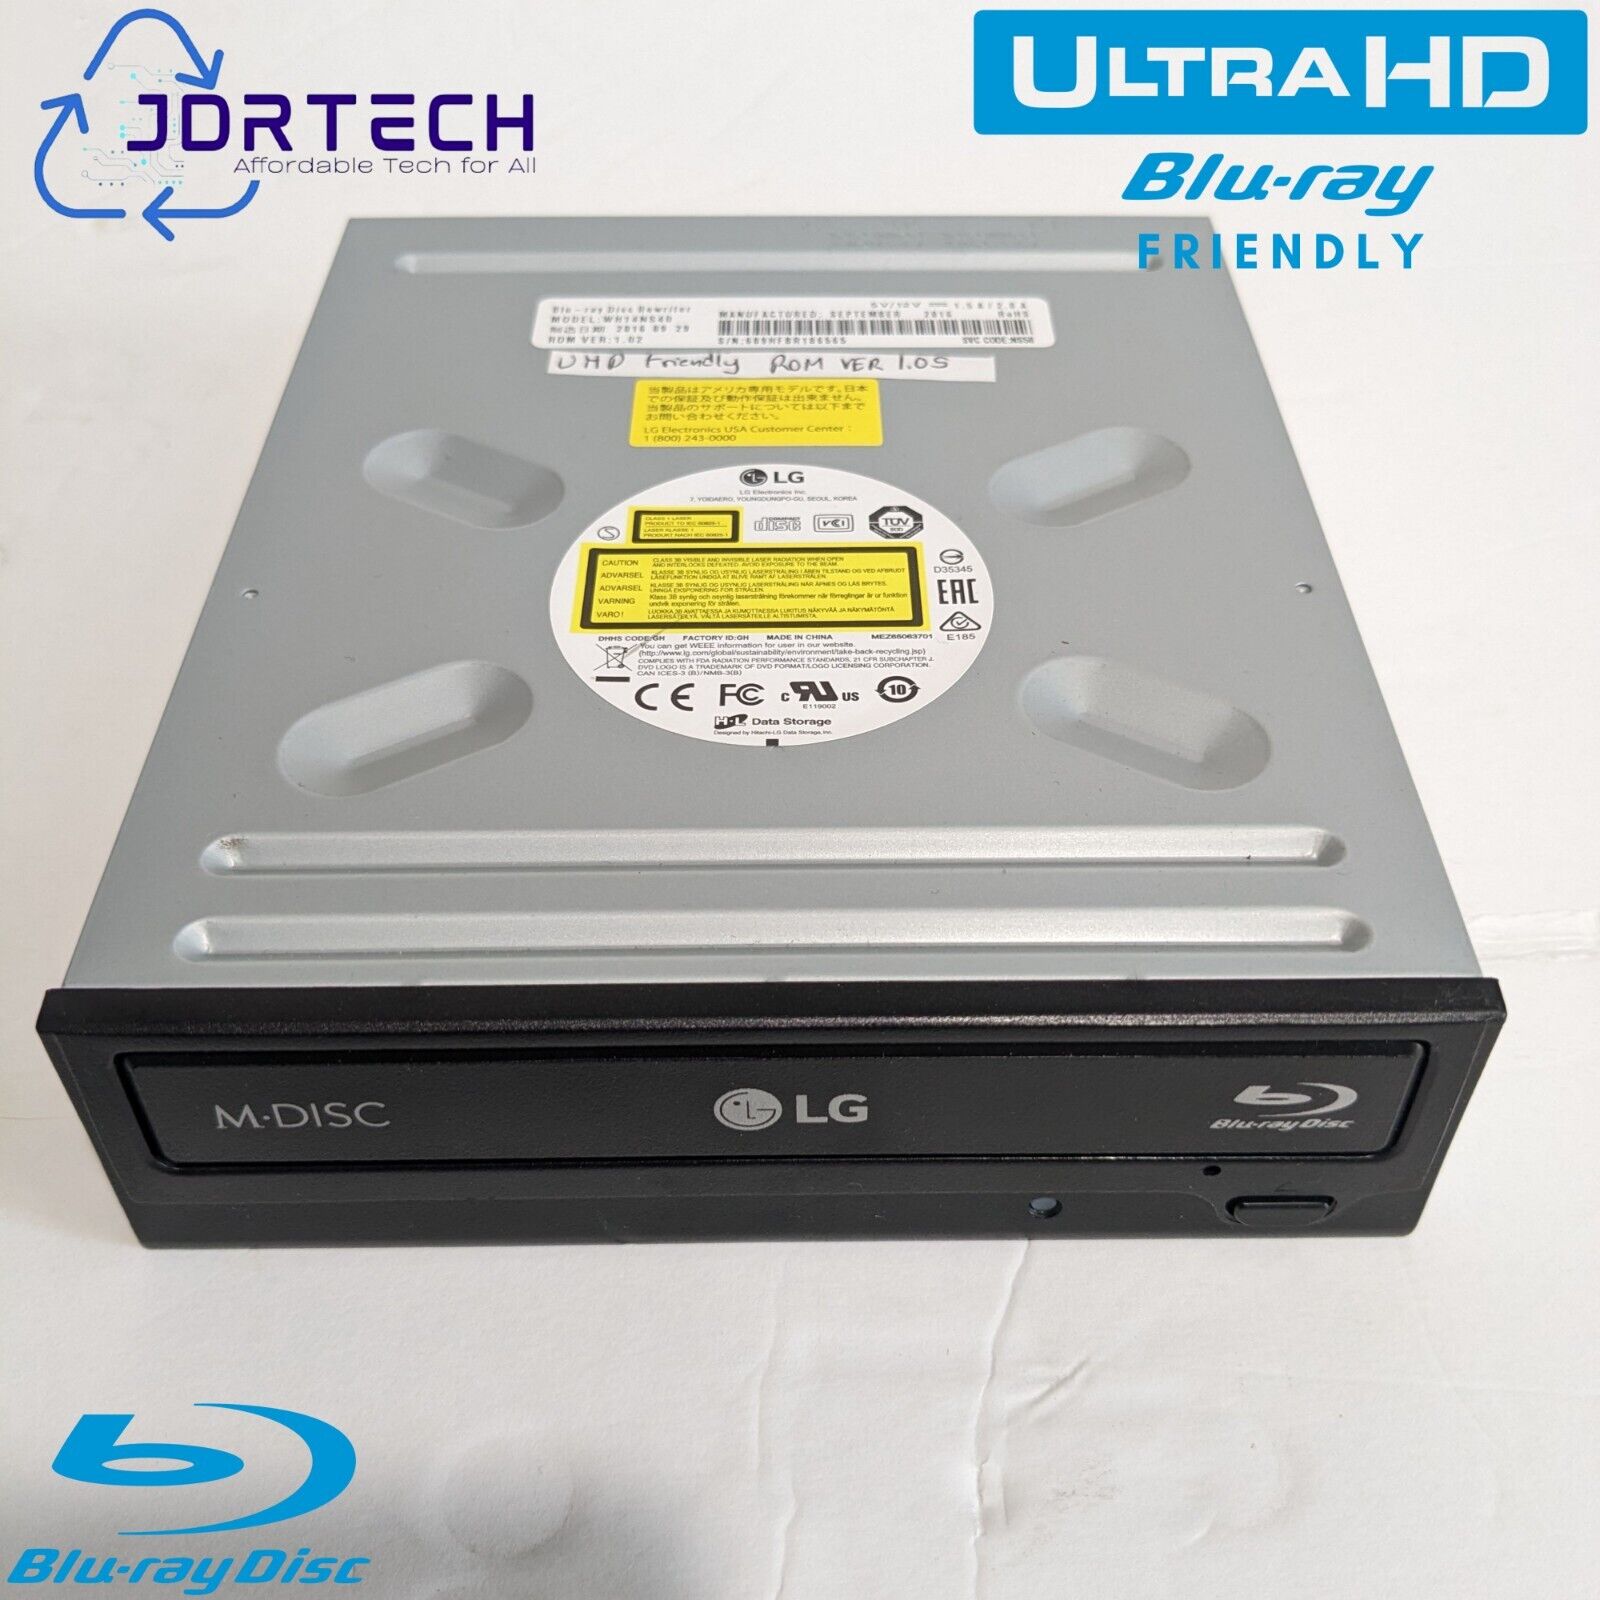 LG WH14NS40 4K ULTRA HD Blu-ray Drive, UHD Friendly FW v1.05MK [UNLOCKED]